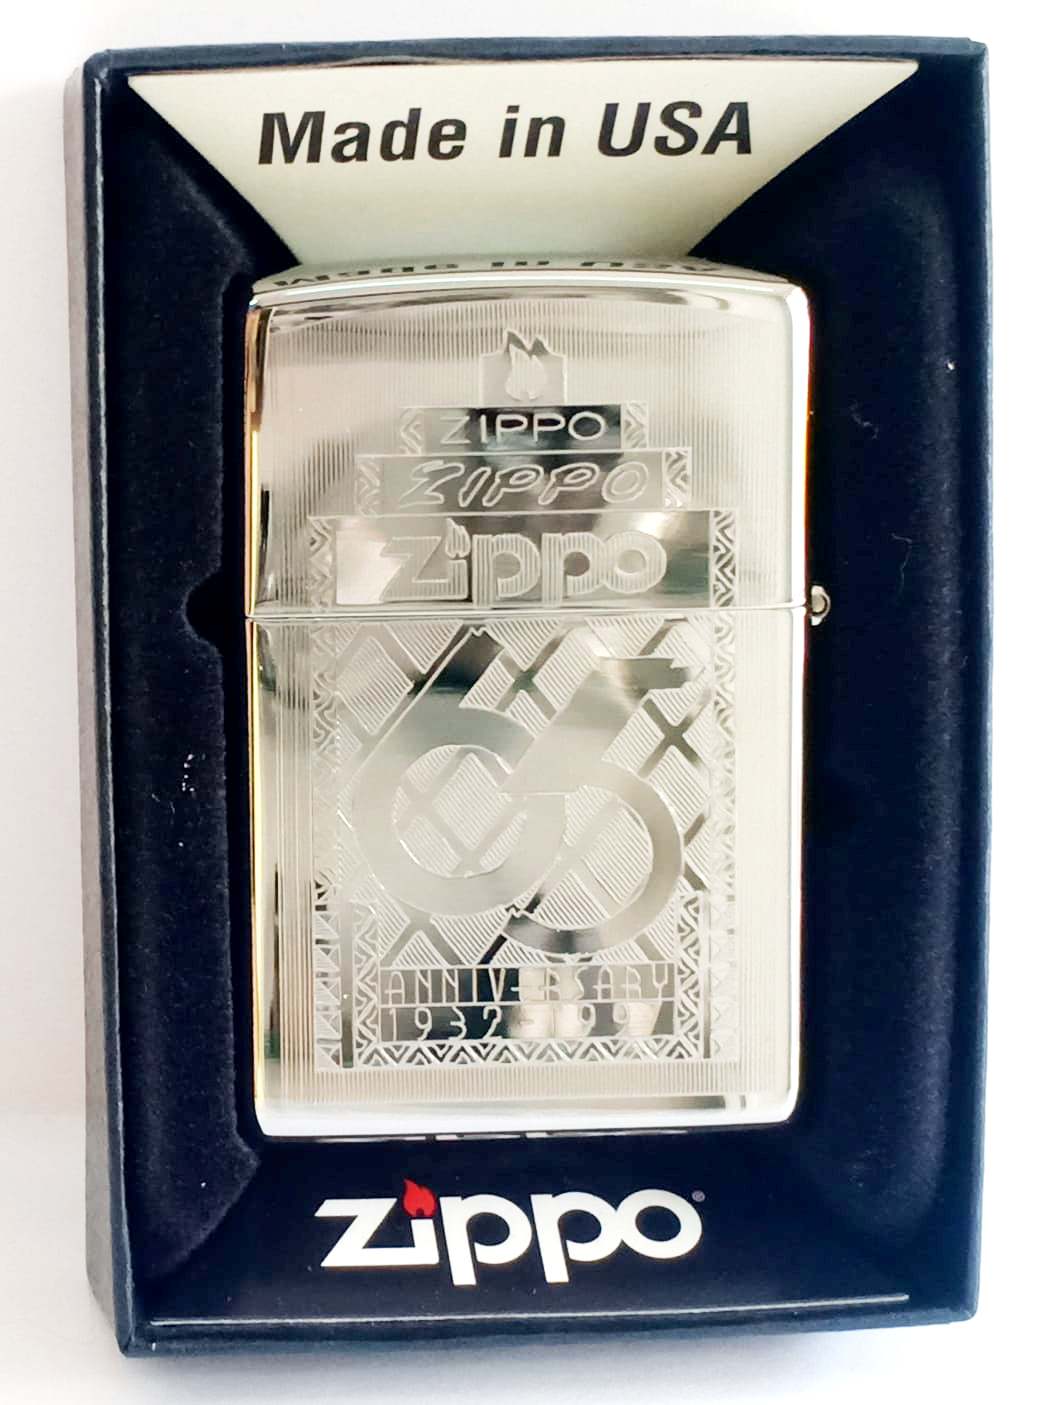 Zippo bong trang khac 2 mat 65 nam thanh lap zippo Z716